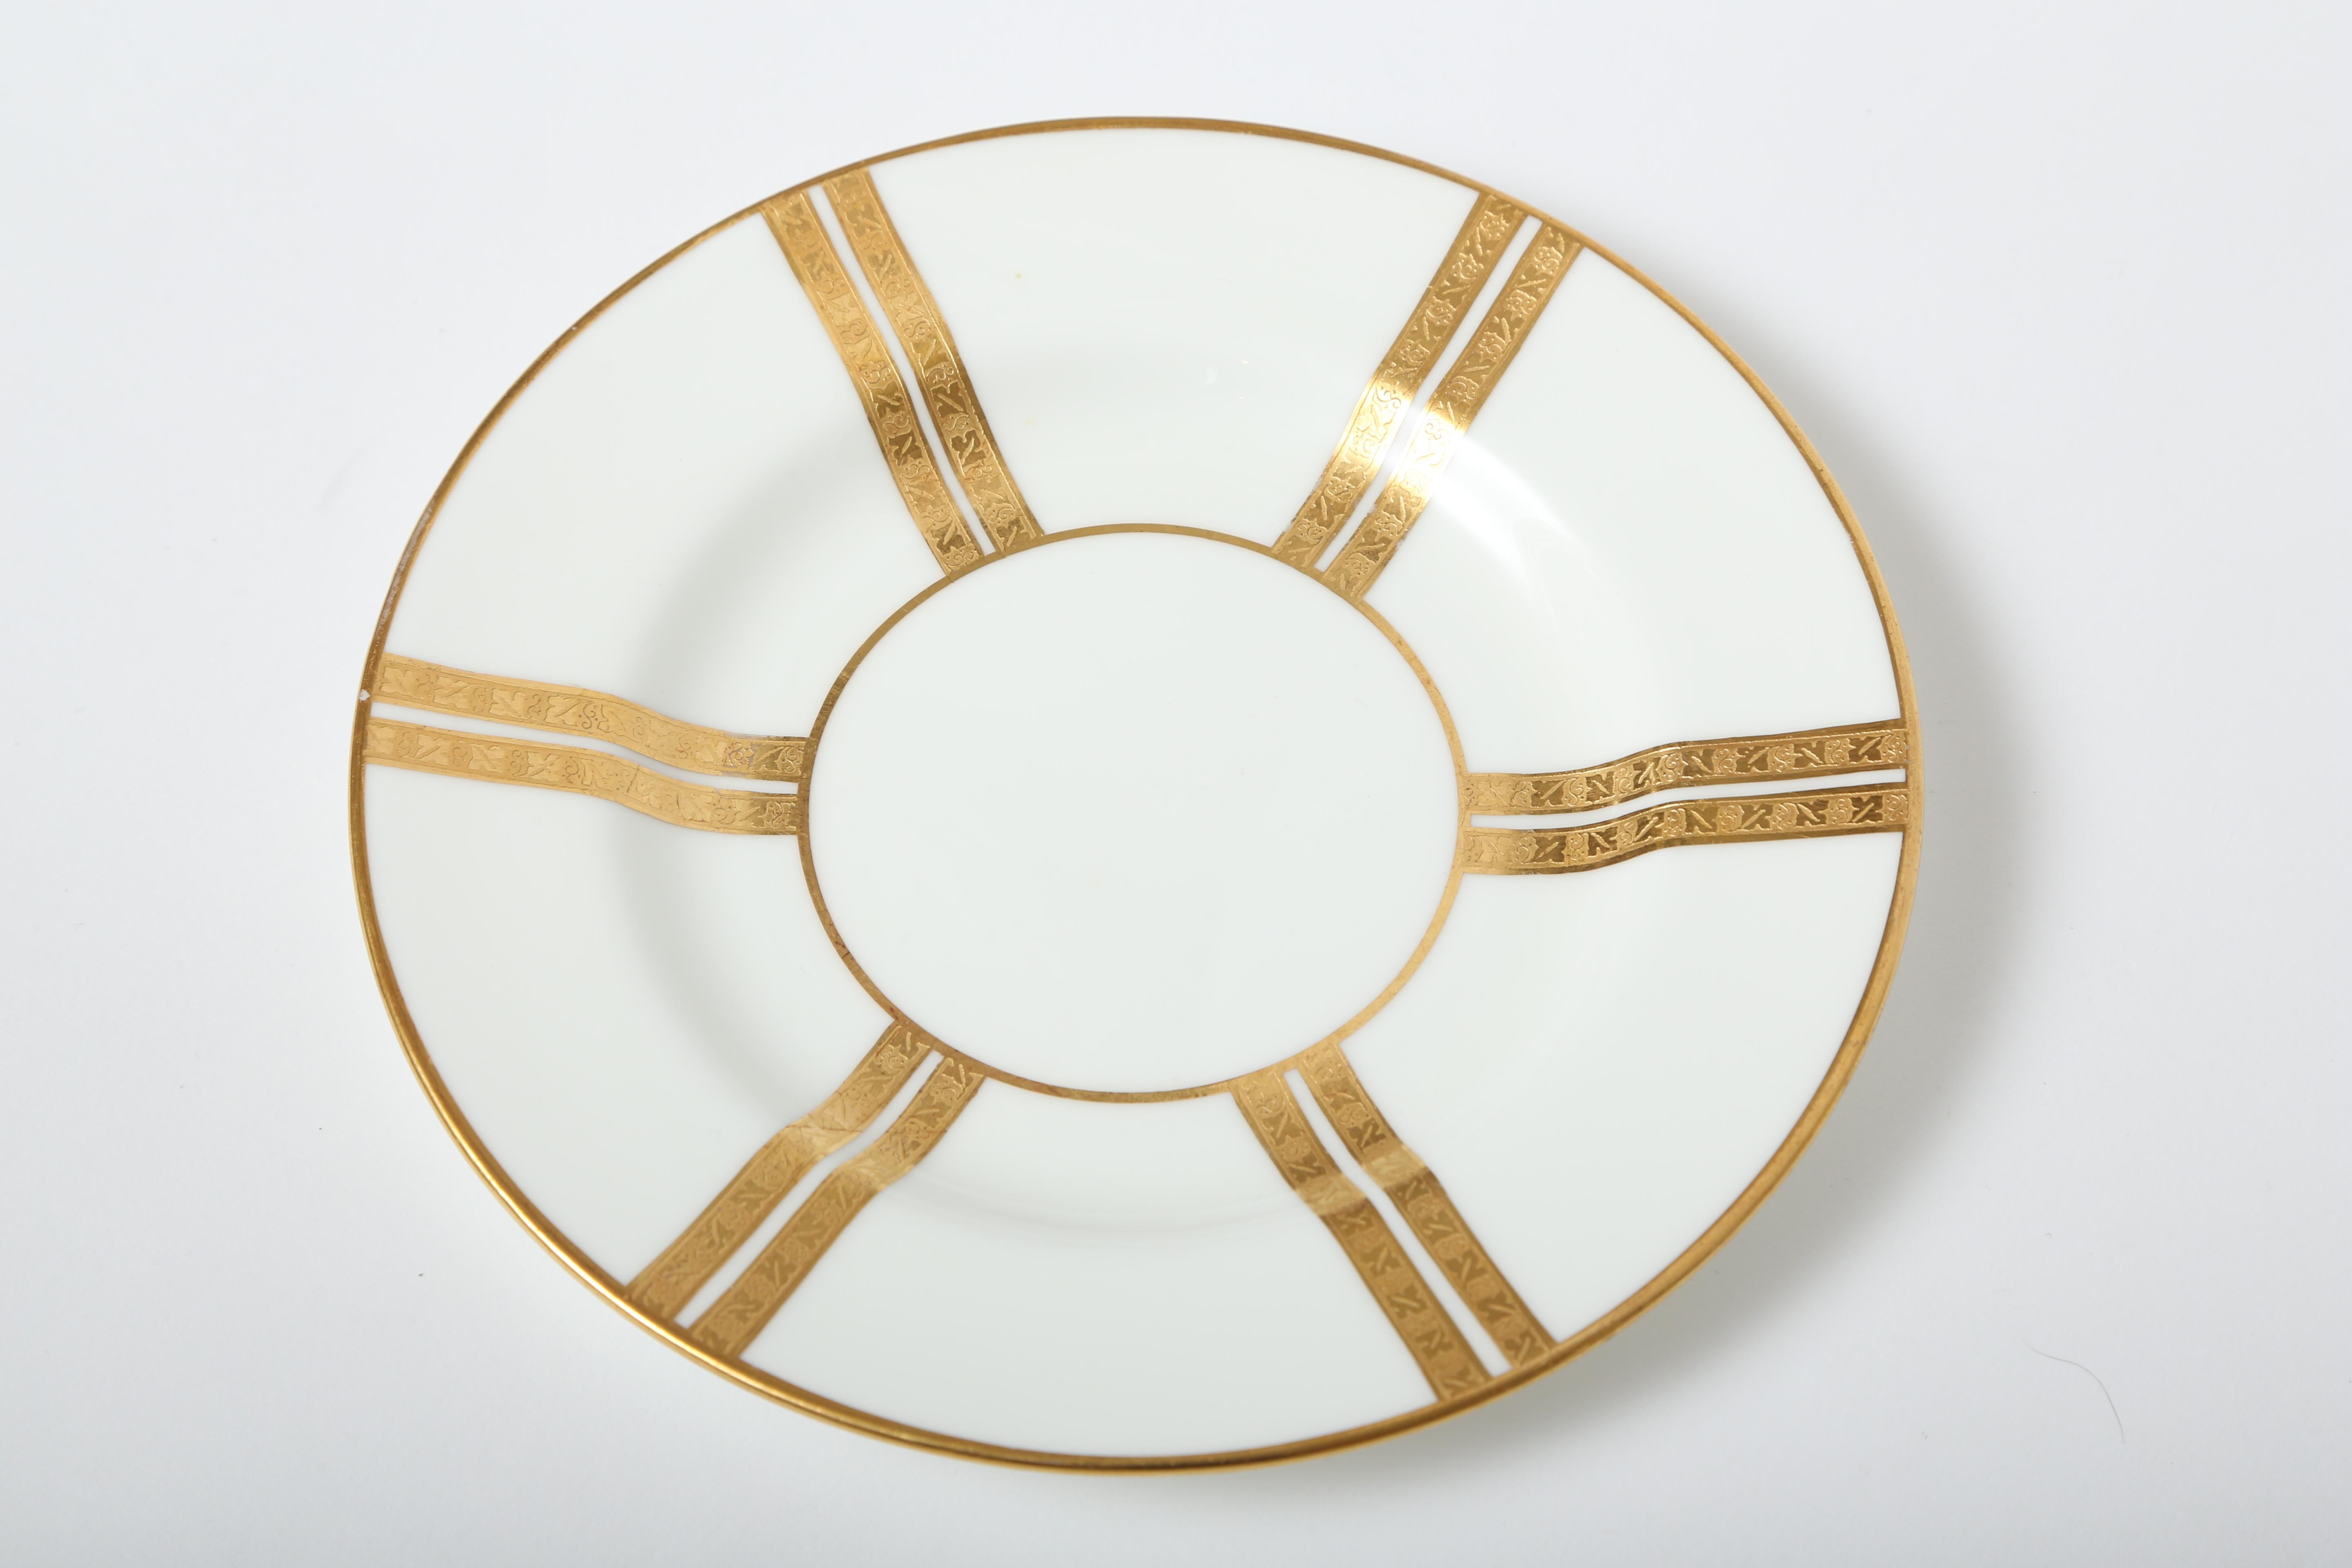 British Custom Set of 11 Antique Art Deco Gold Stripe Bread Plates, Minton, England